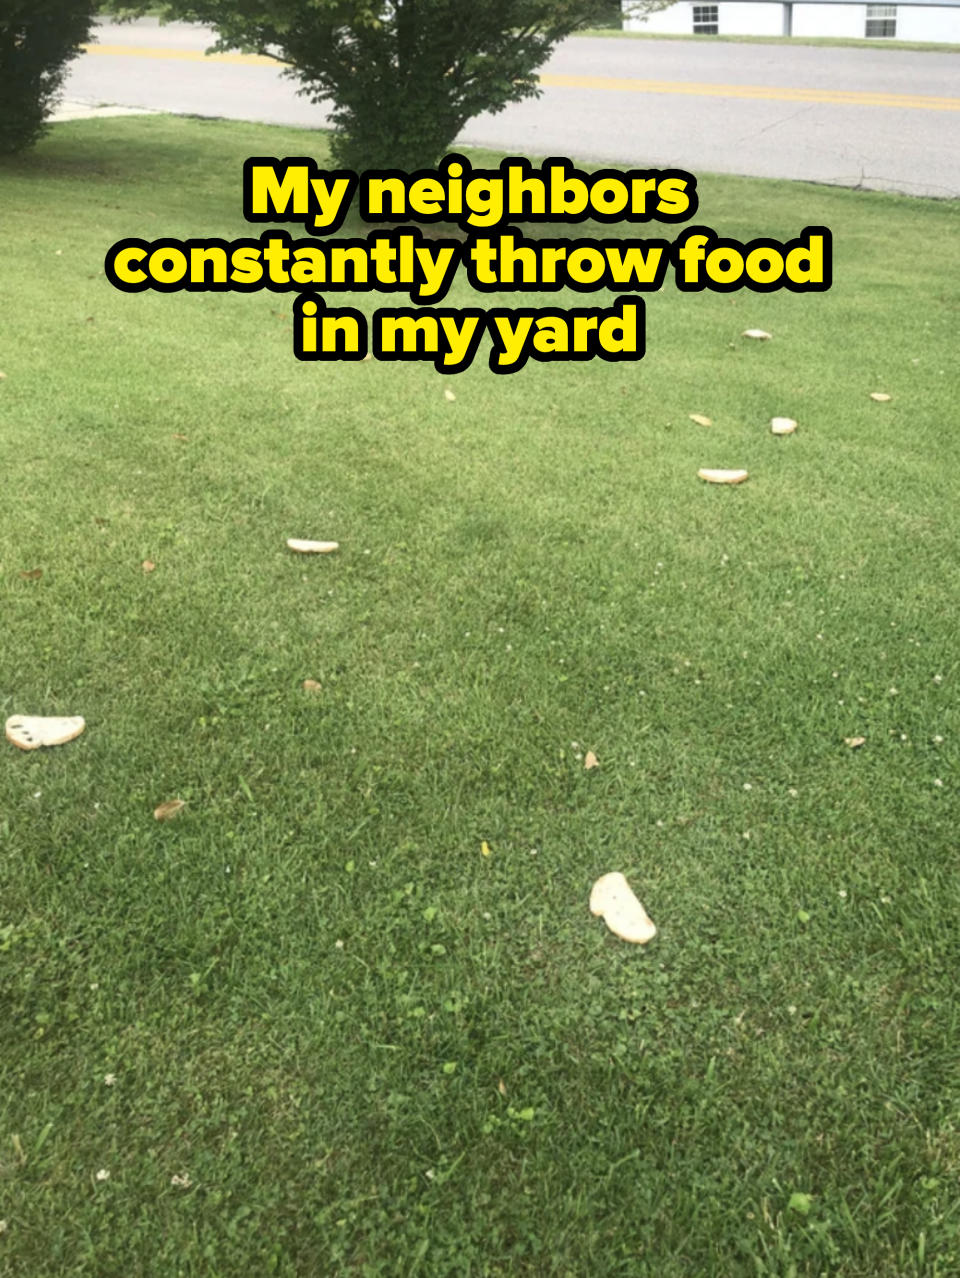 Food in someone's yard